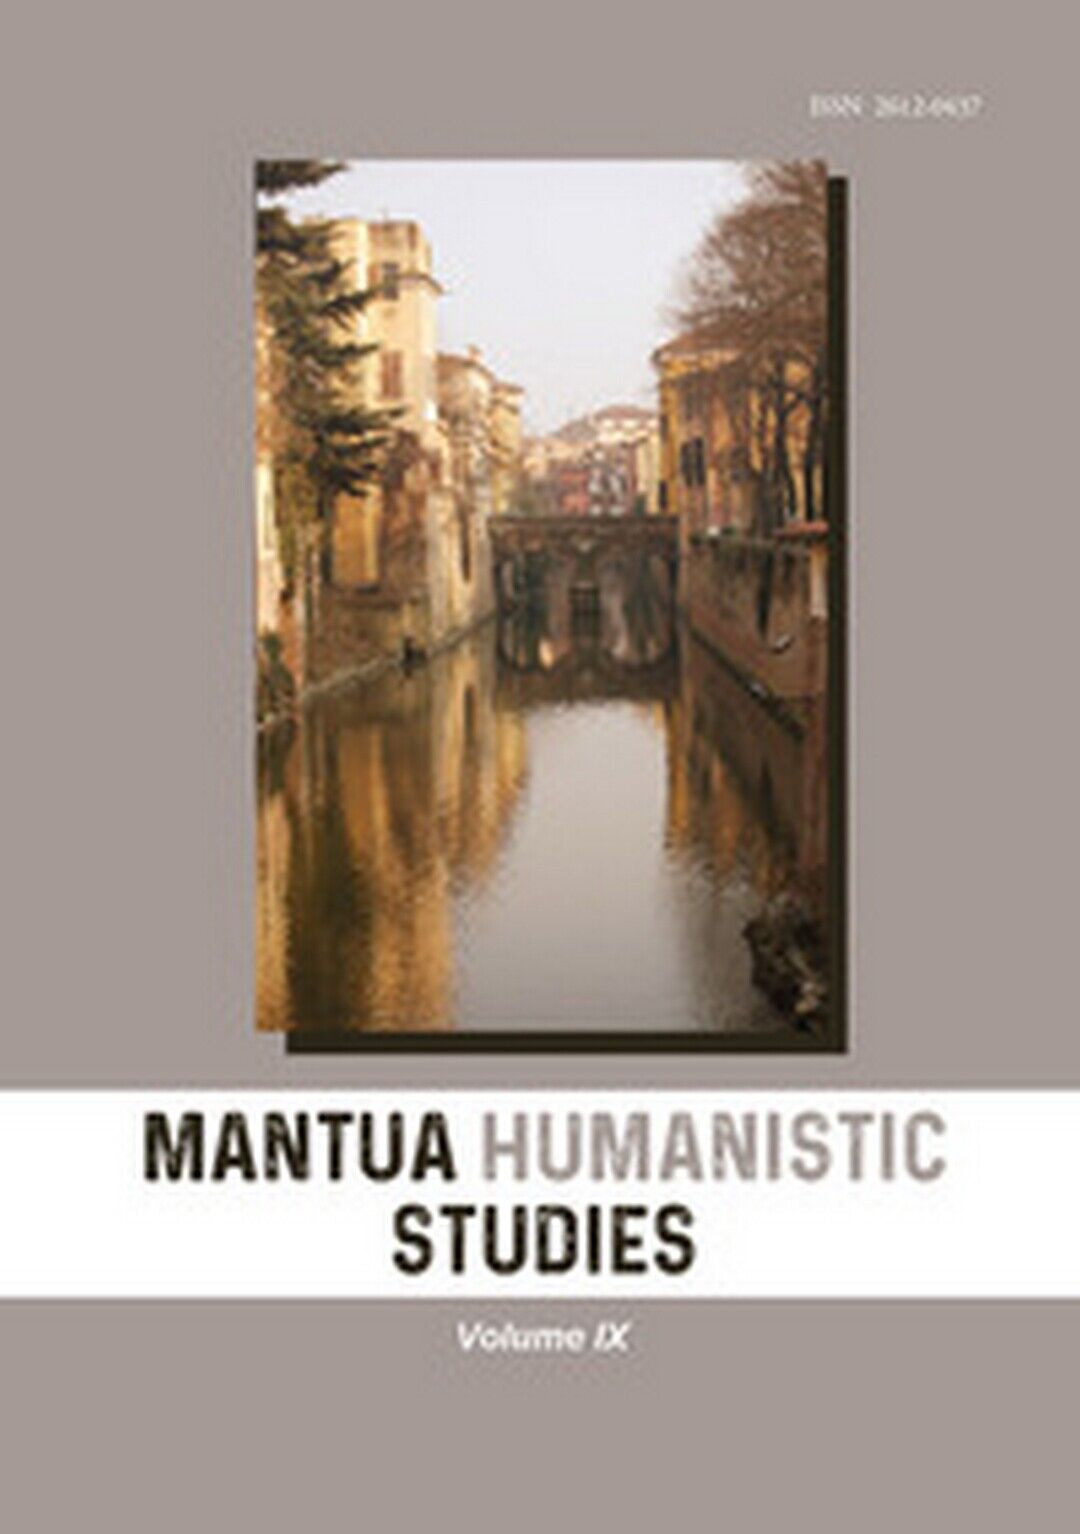 Mantua humanistic studies Vol.9  di R. Santi,  2019,  Youcanprint